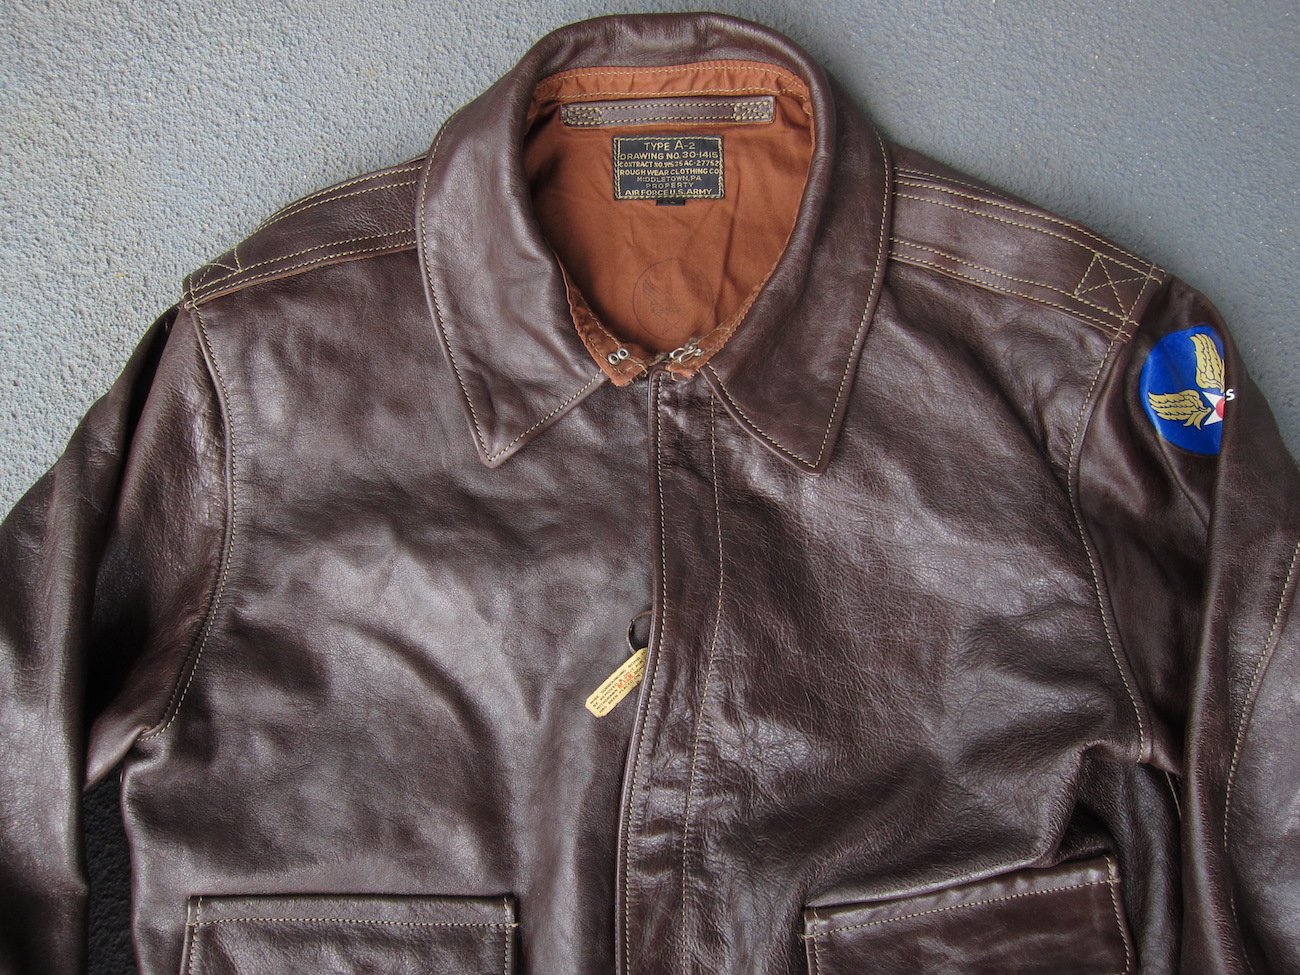 Bomb tags | Vintage Leather Jackets Forum